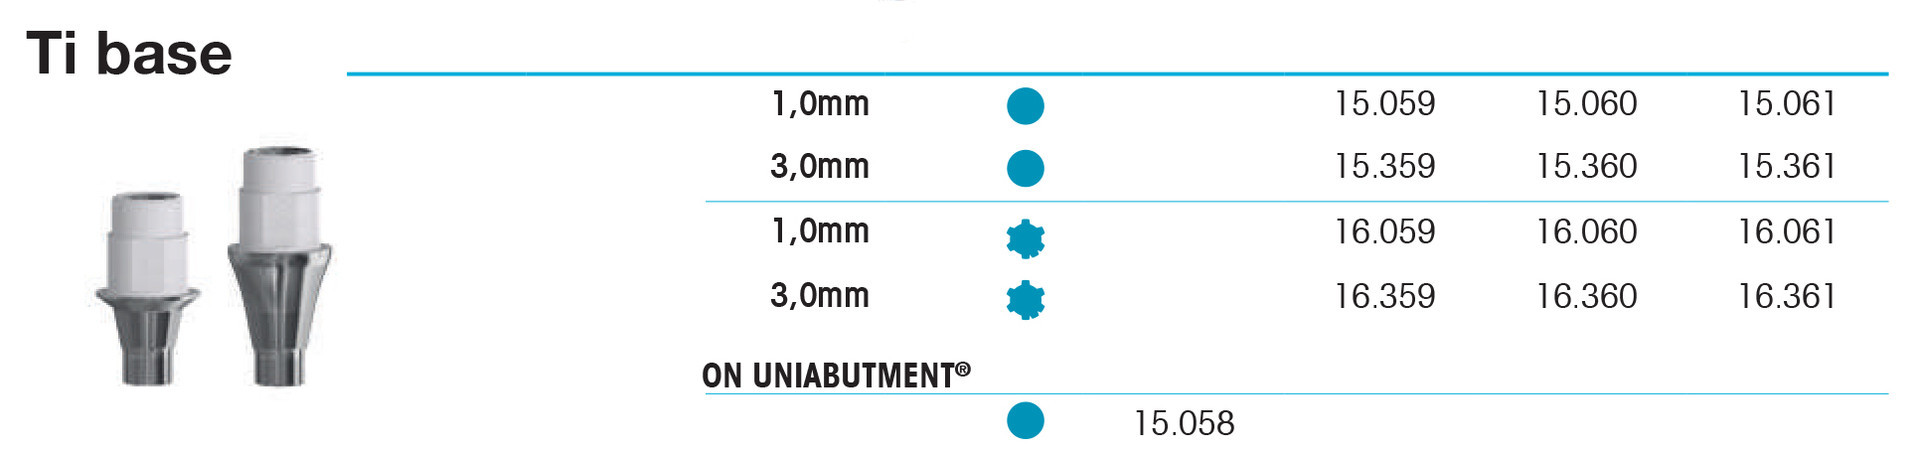 Ti Base 3.0mm EV/4.8, blue, non-engaging